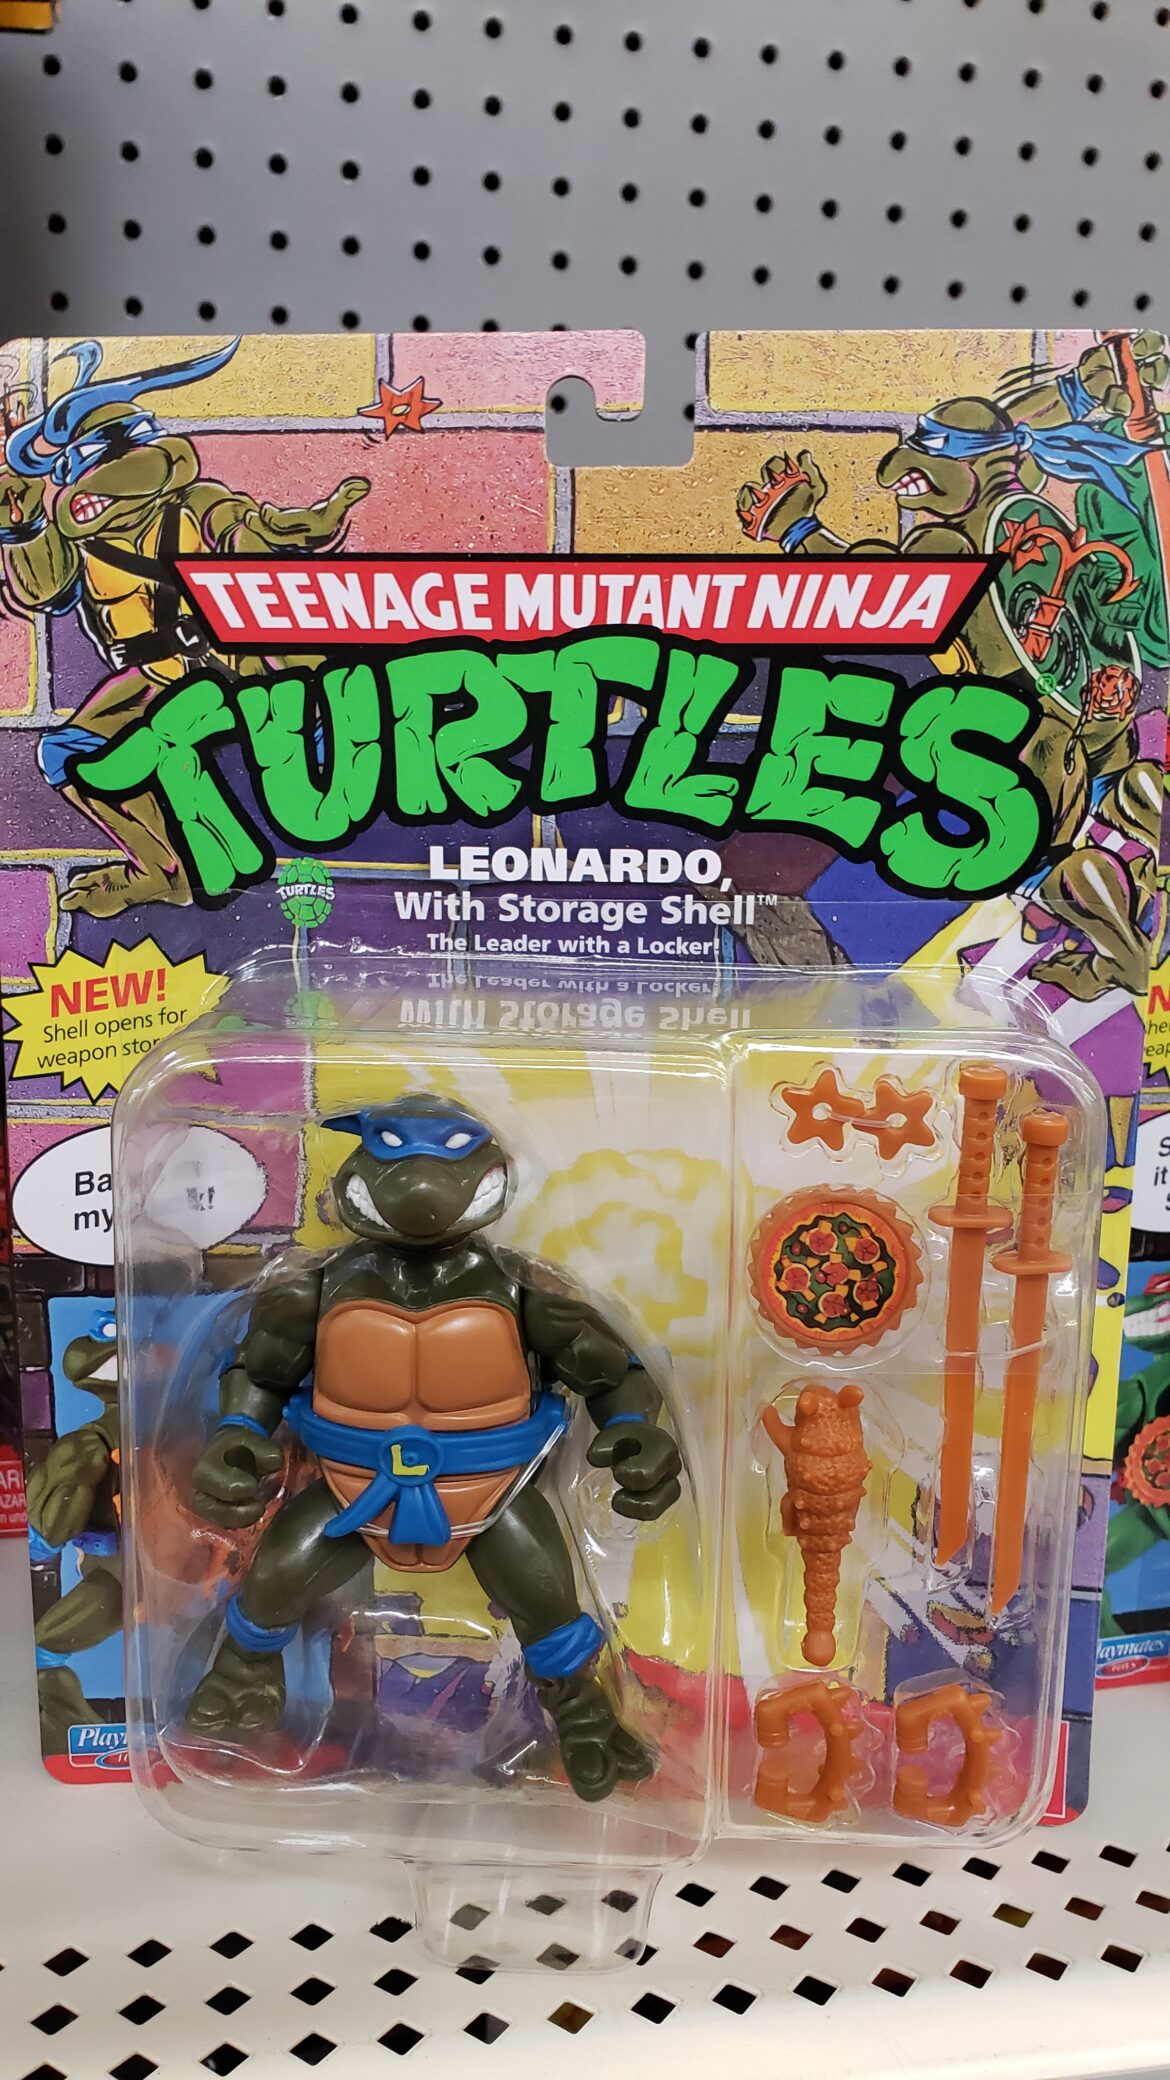 Teenage Mutant Ninja Turtles (TMNT) Retro Toys From the 80s Found at Walmart